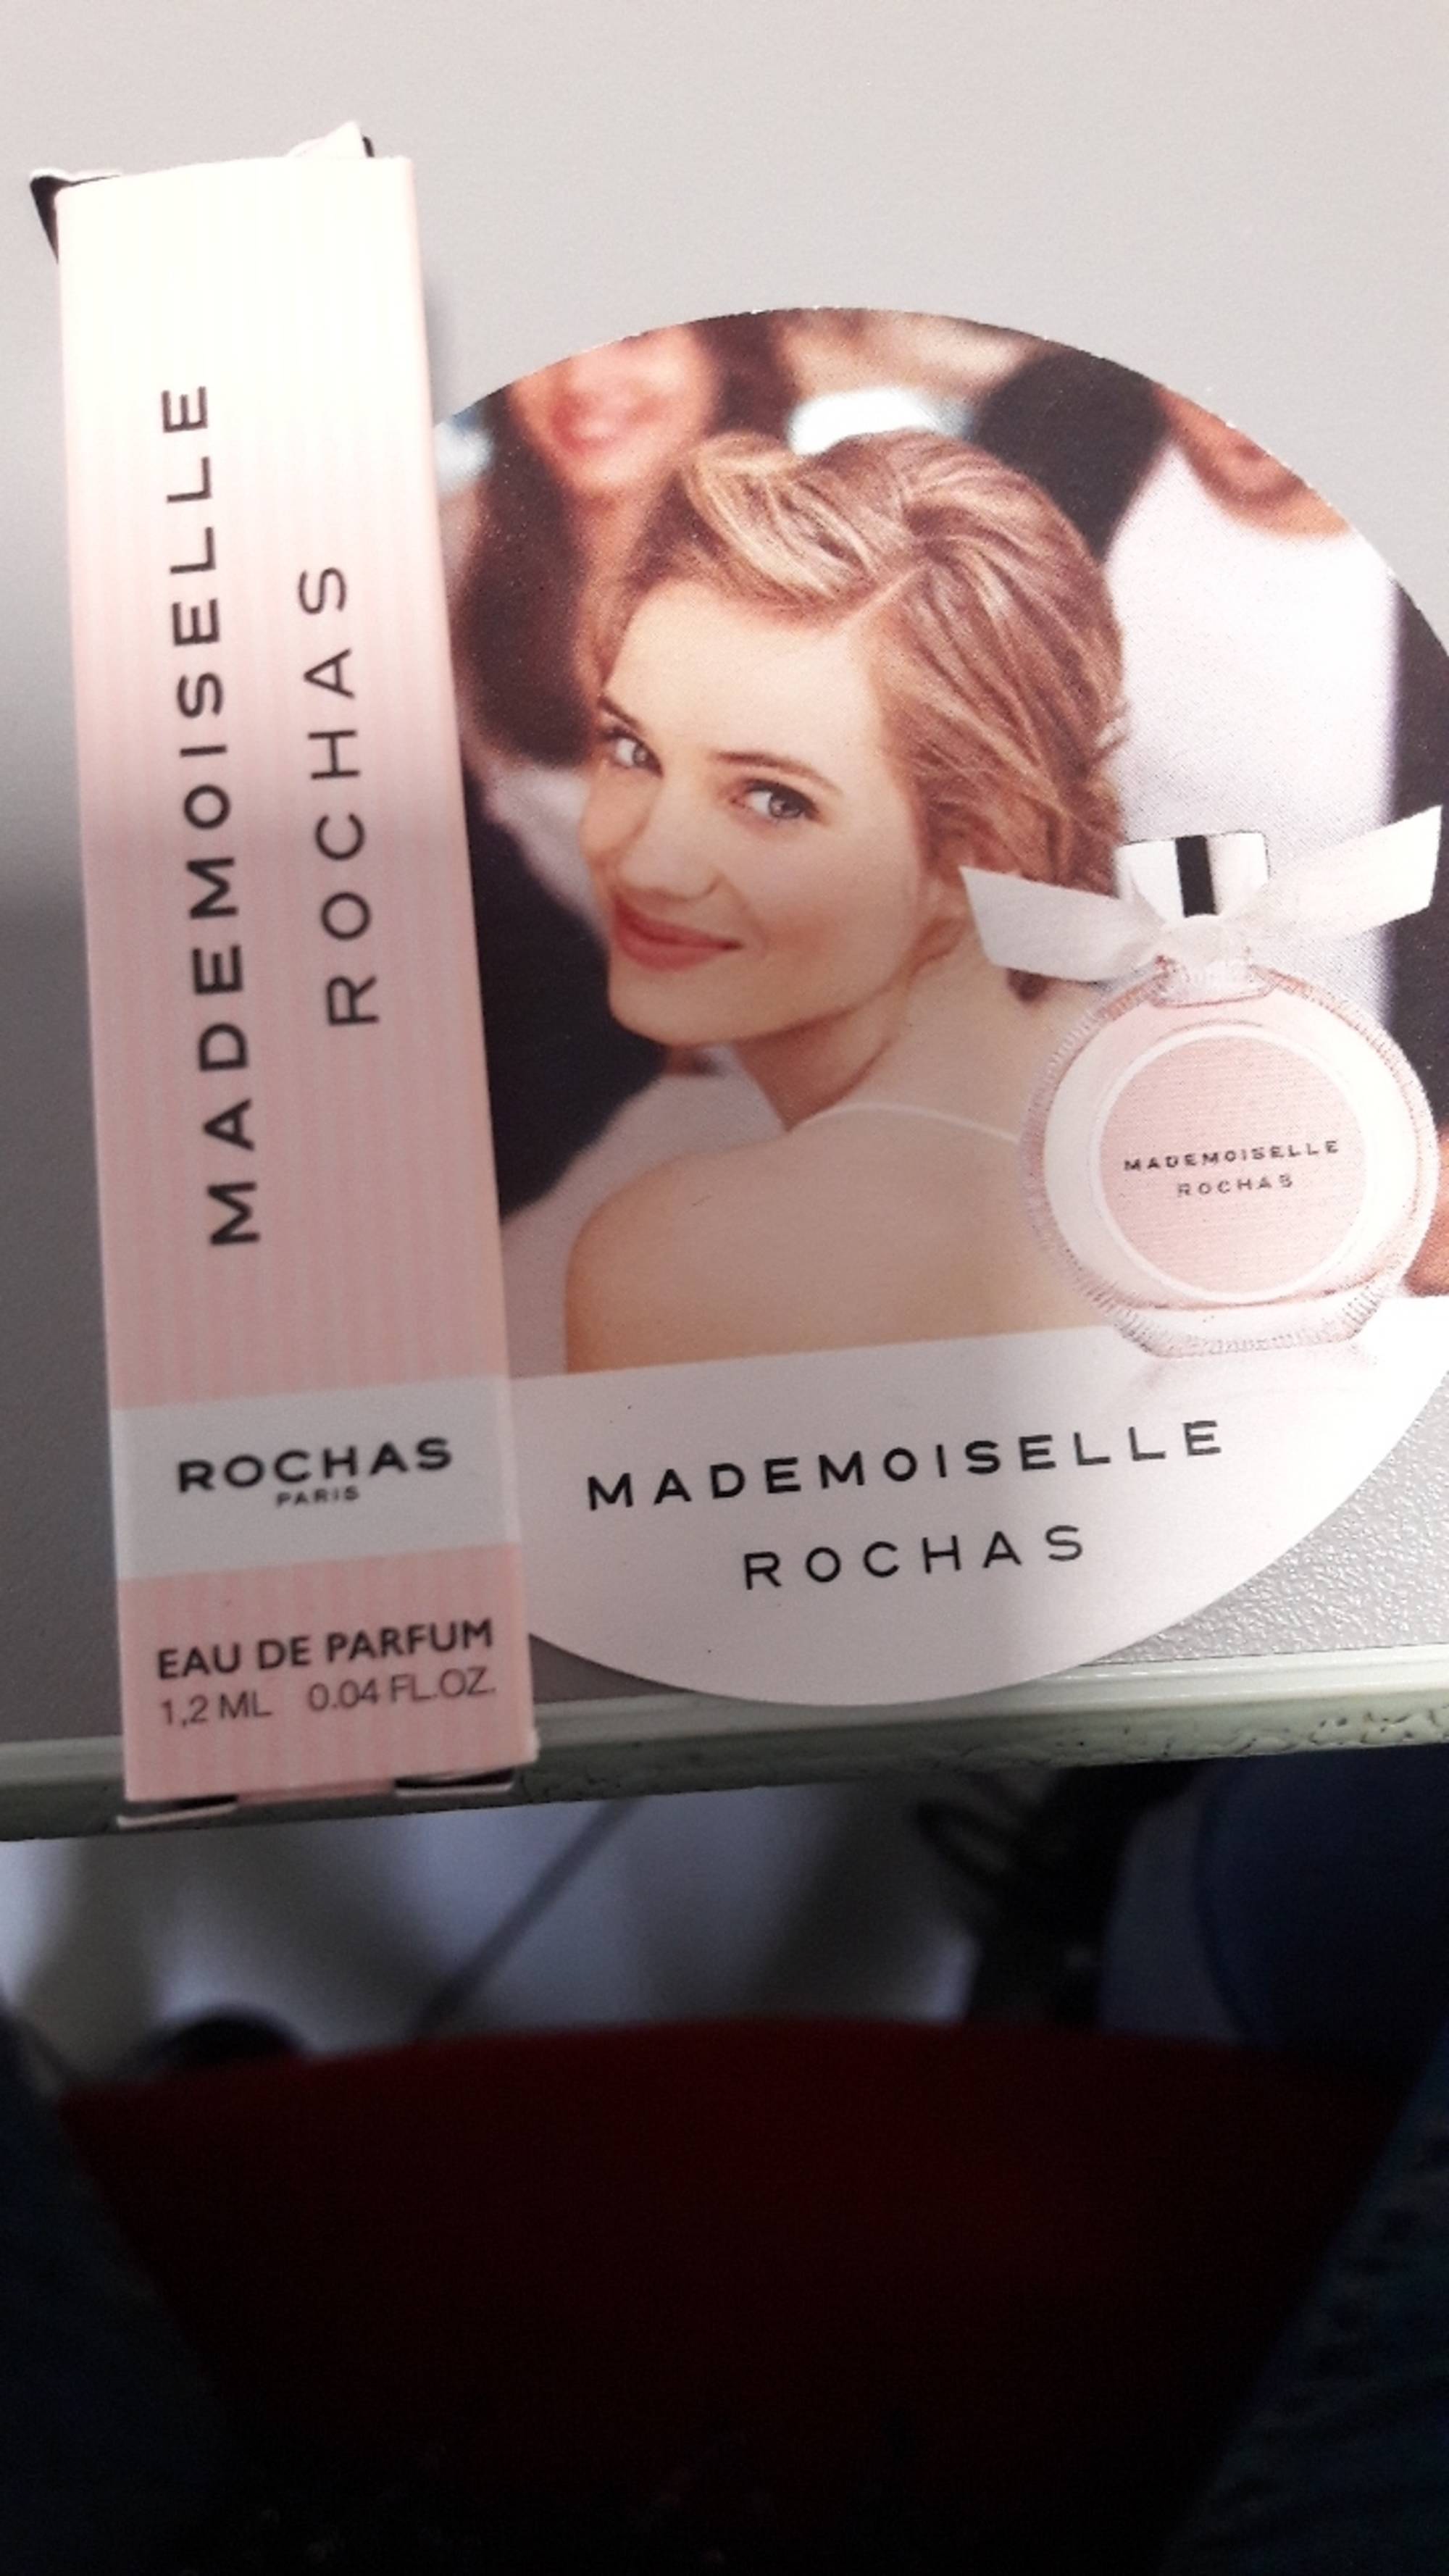 ROCHAS - Mademoiselle Rochas - Eau de parfum